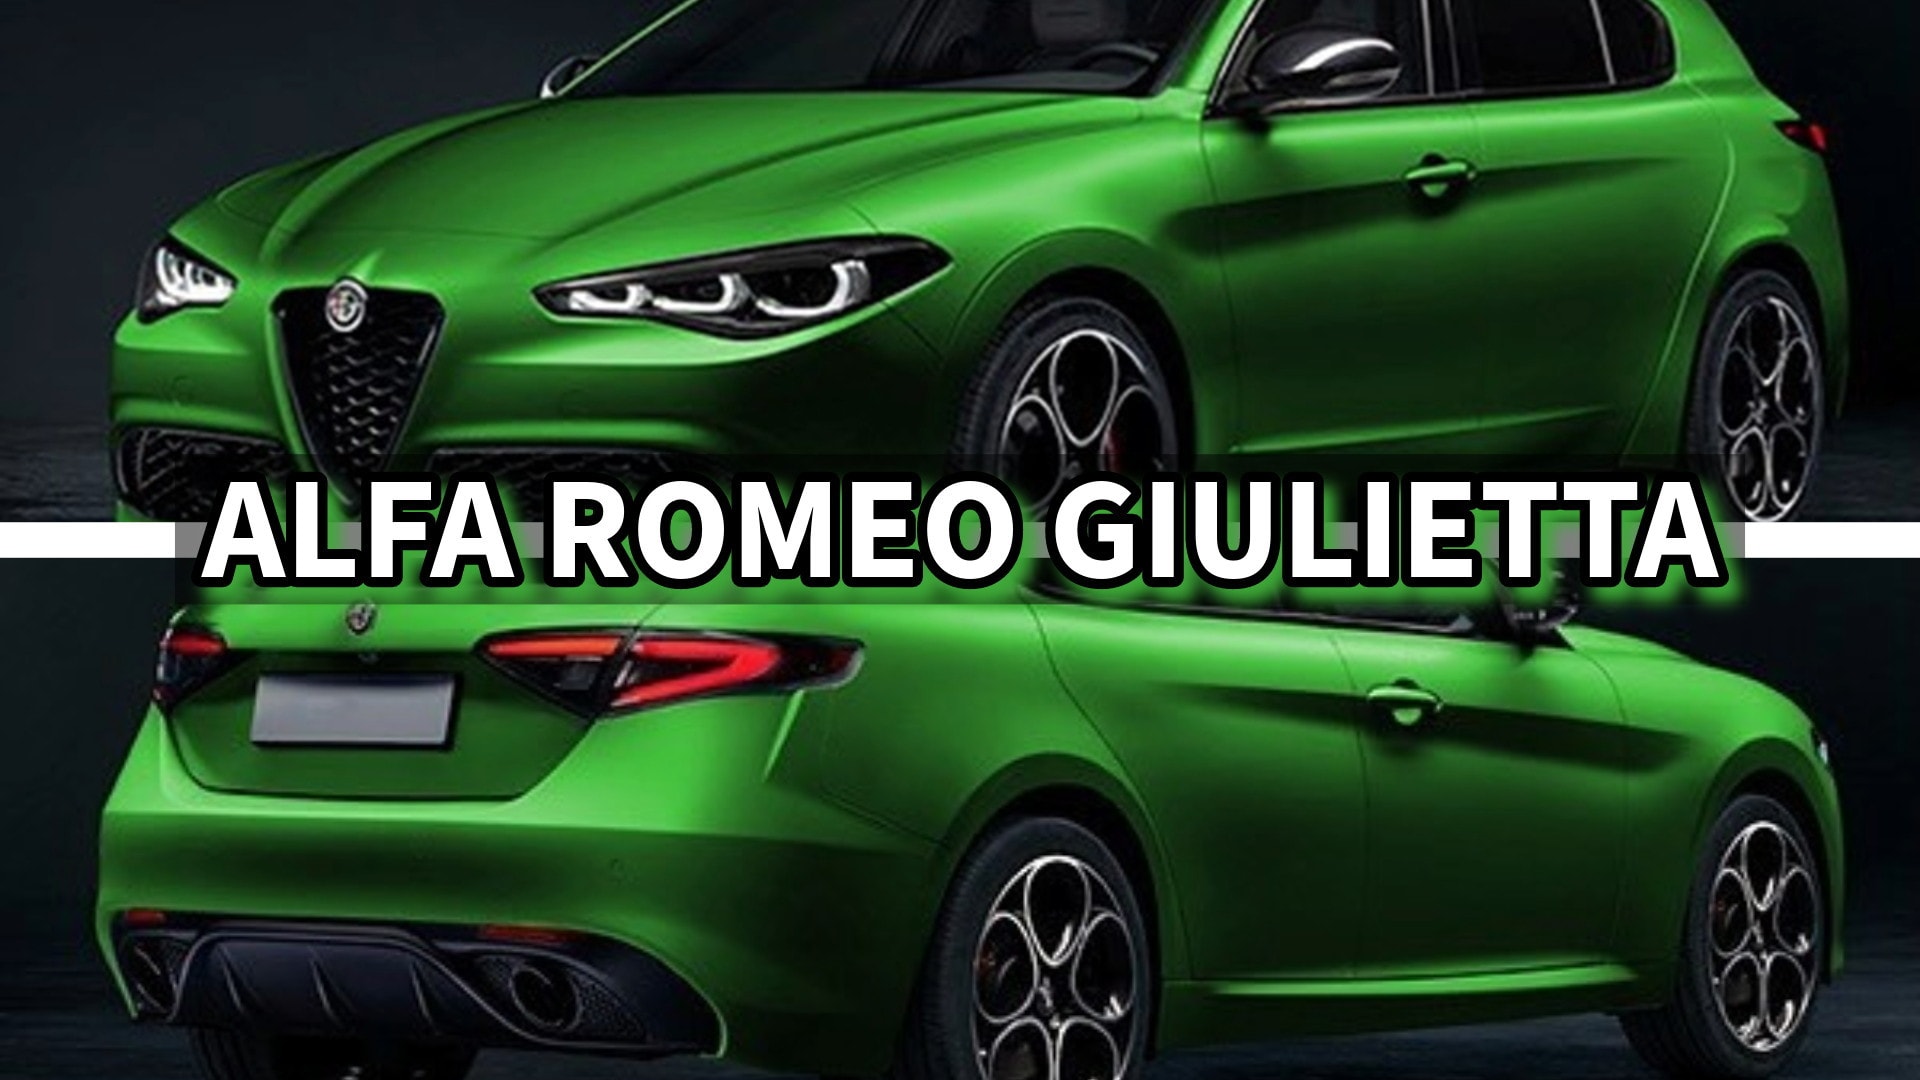 It's the 'new' Alfa Romeo Giulietta